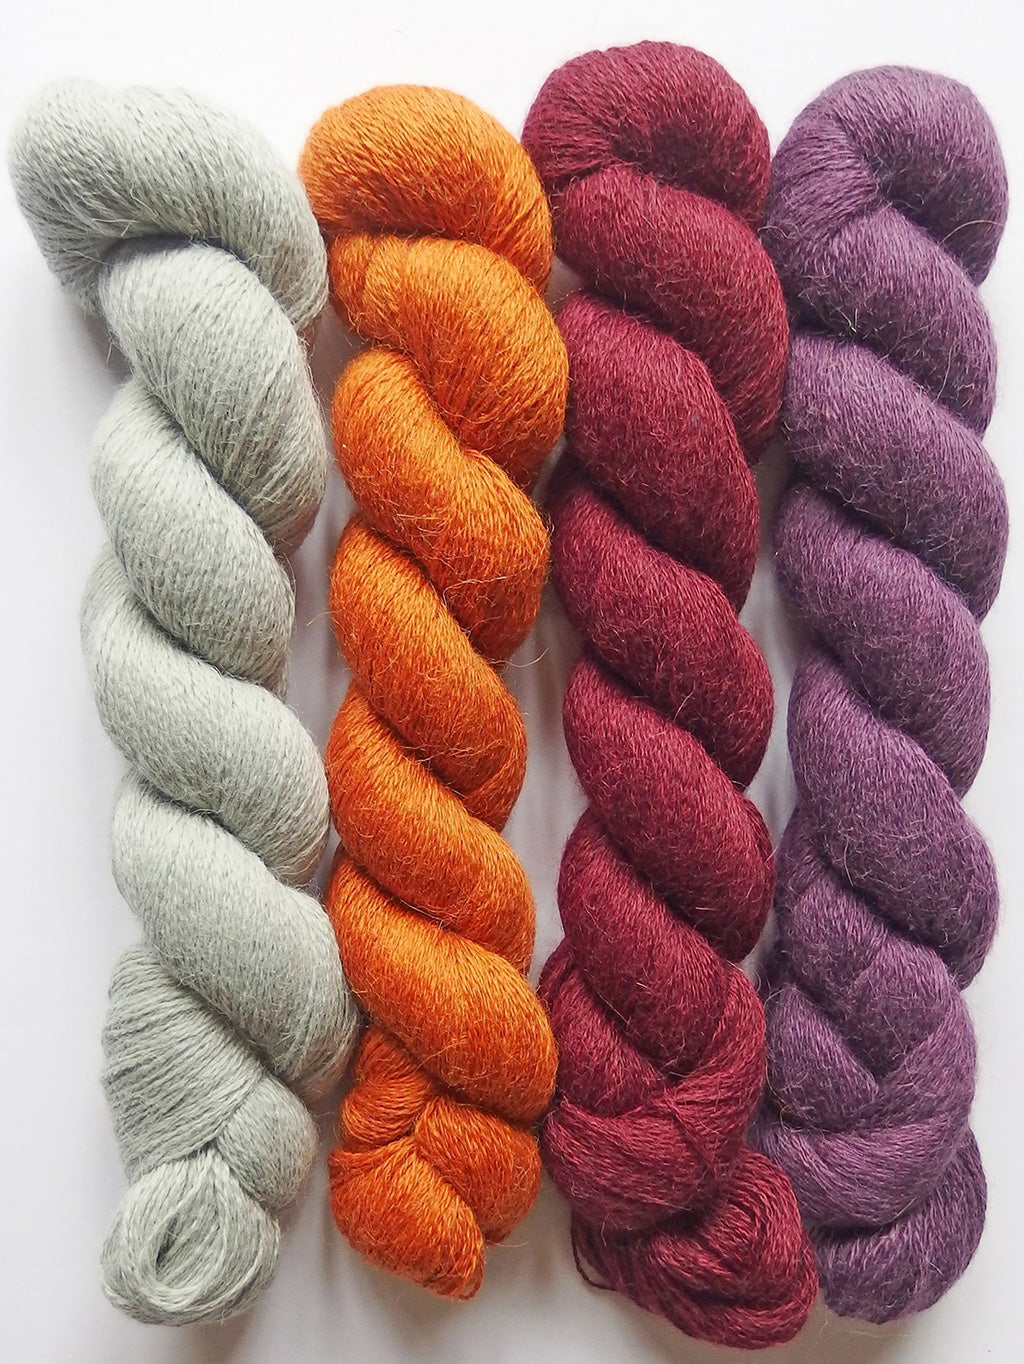 Skeins of yarn from Seam Haberdashery